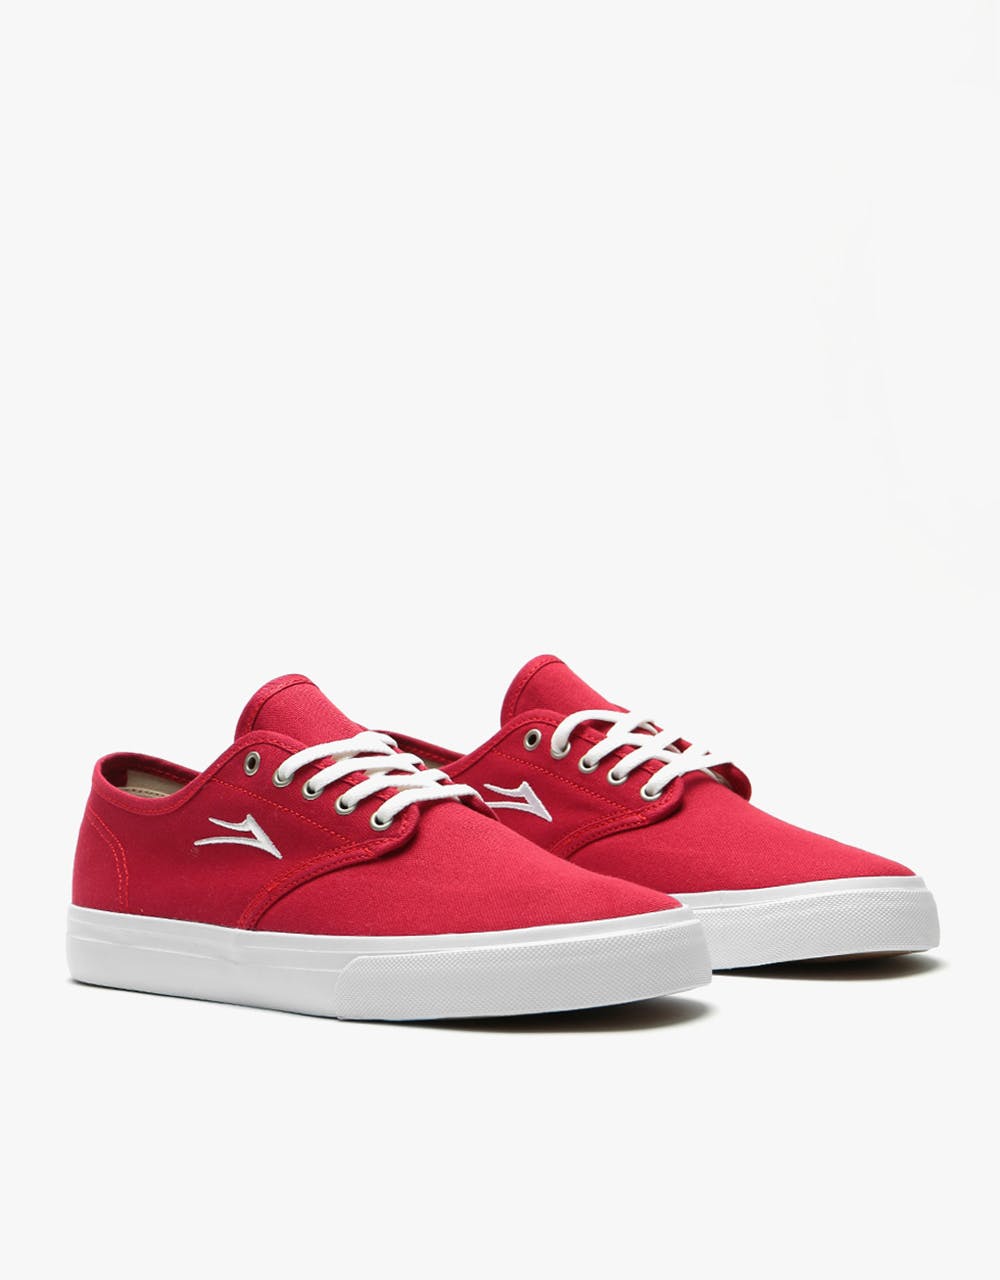 Lakai Oxford Skate Shoes - Red Canvas